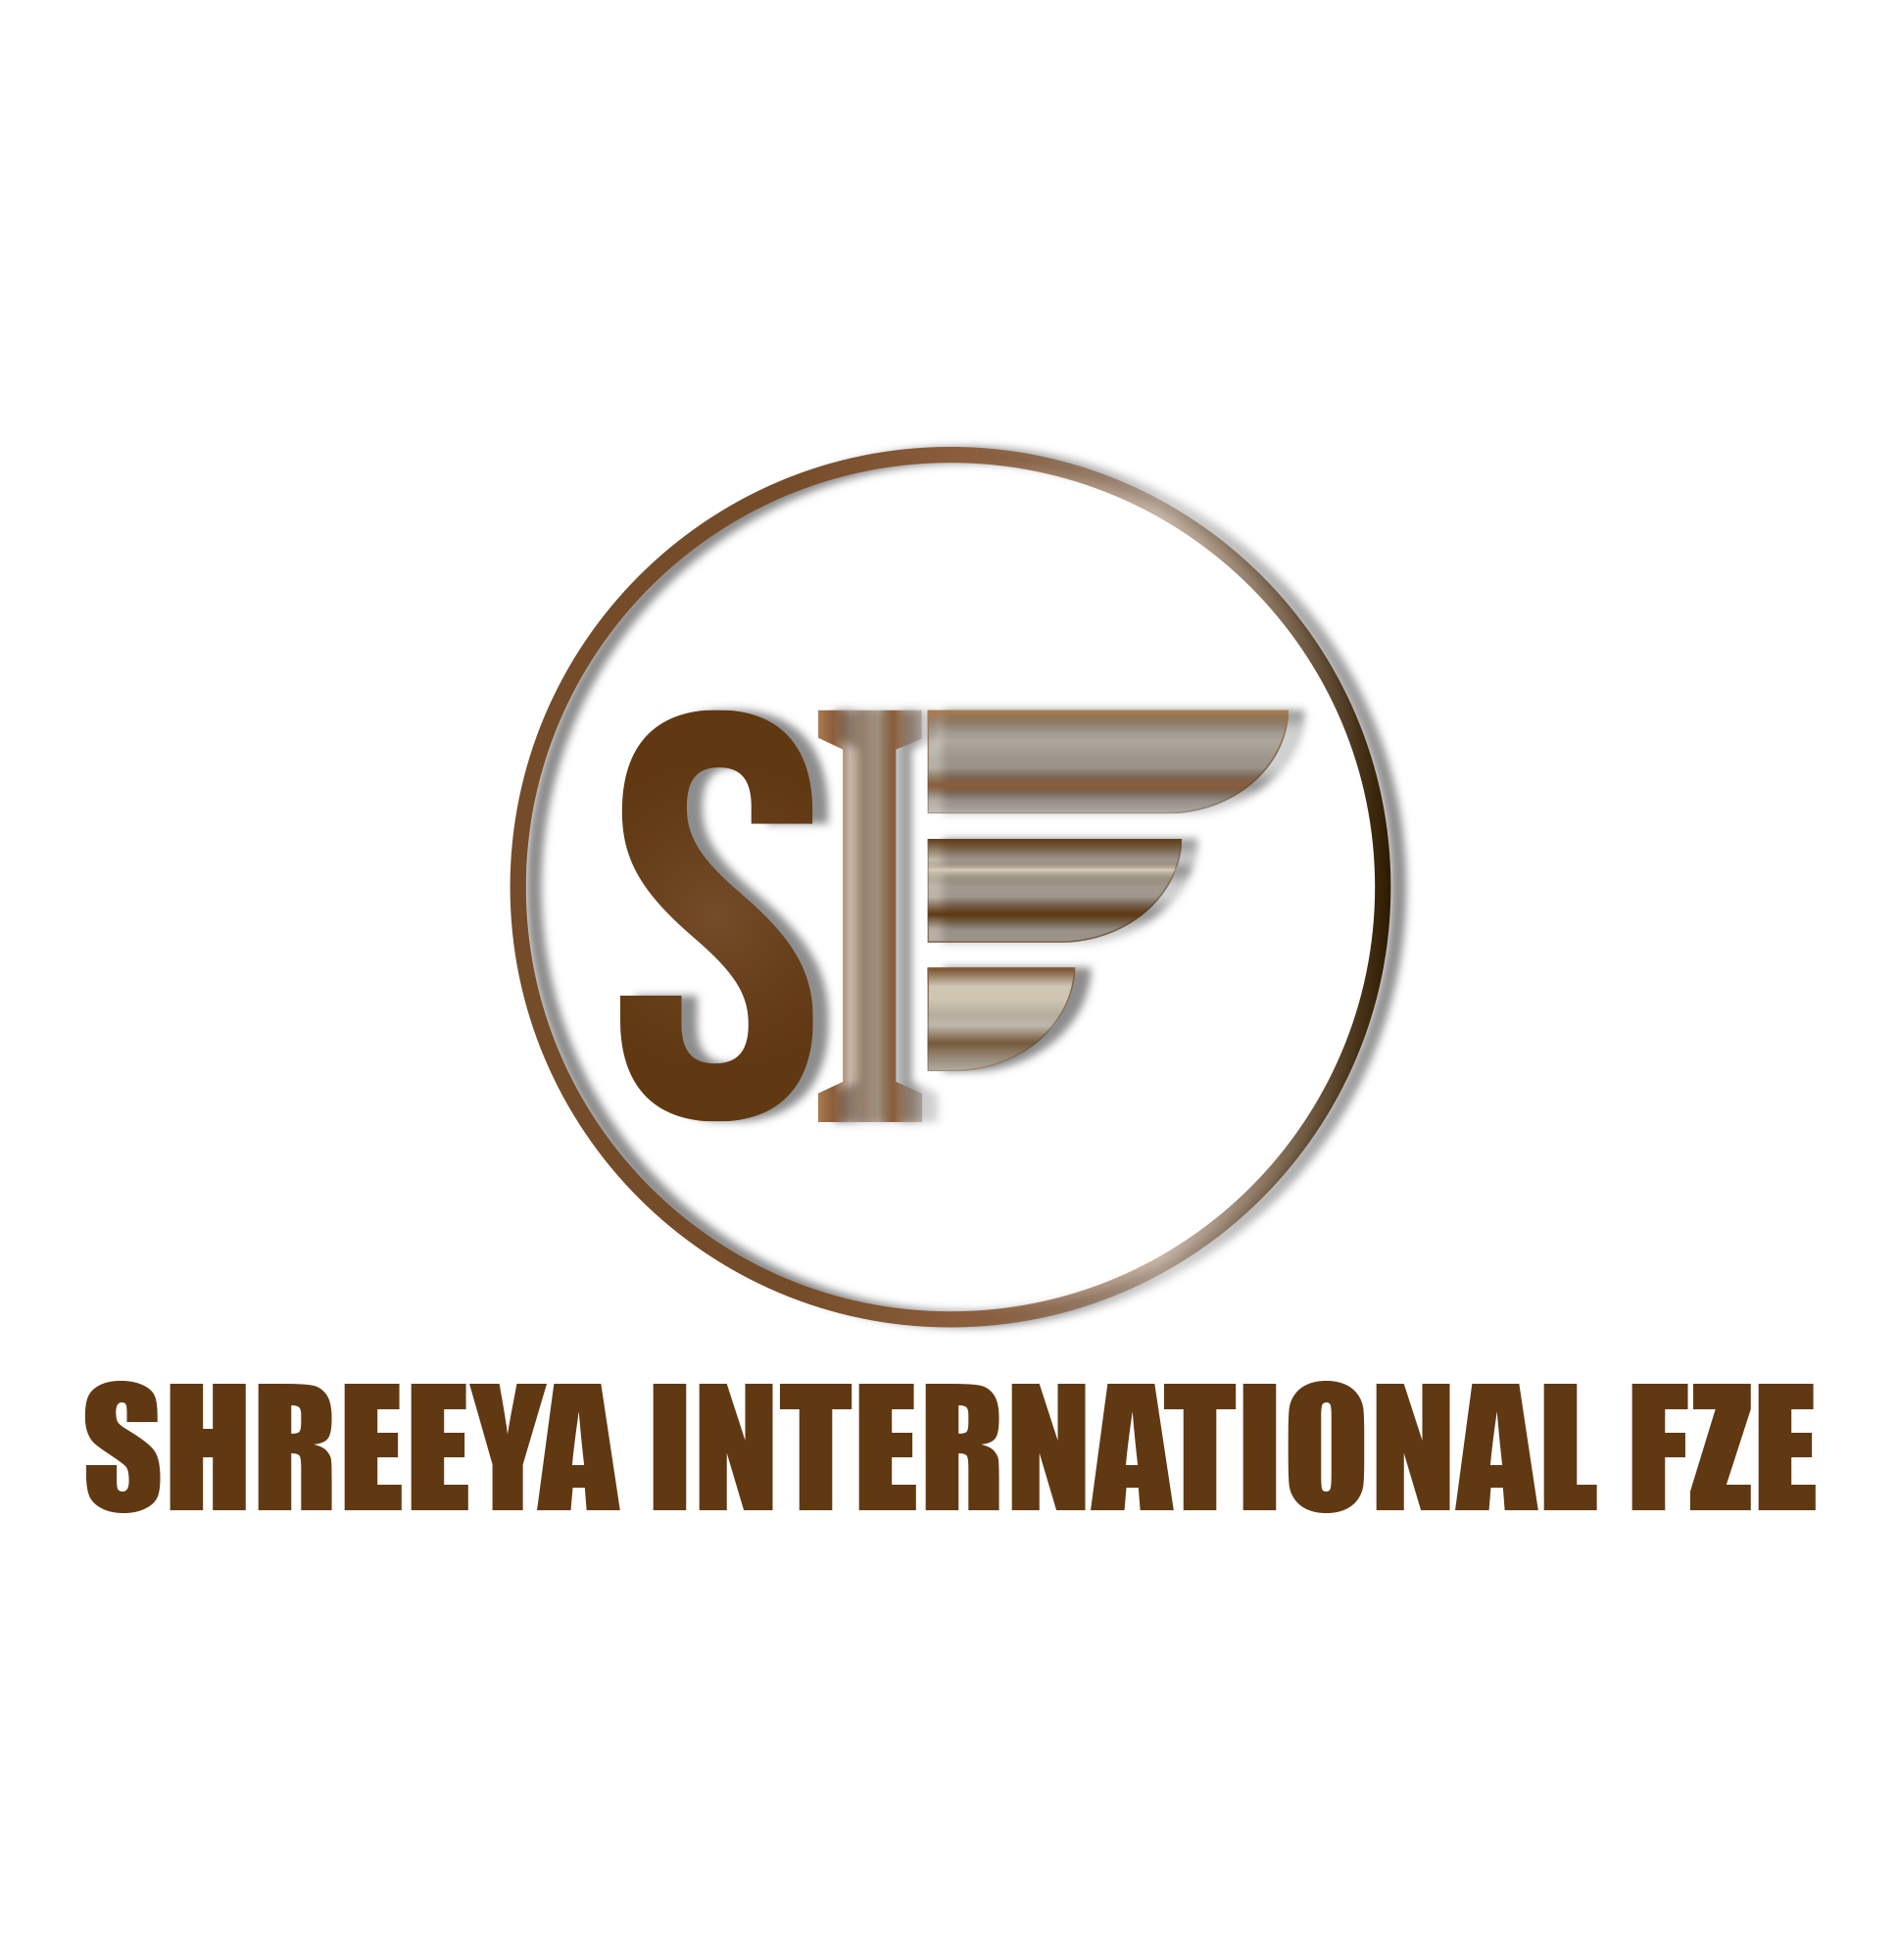 Shreeya International FZE